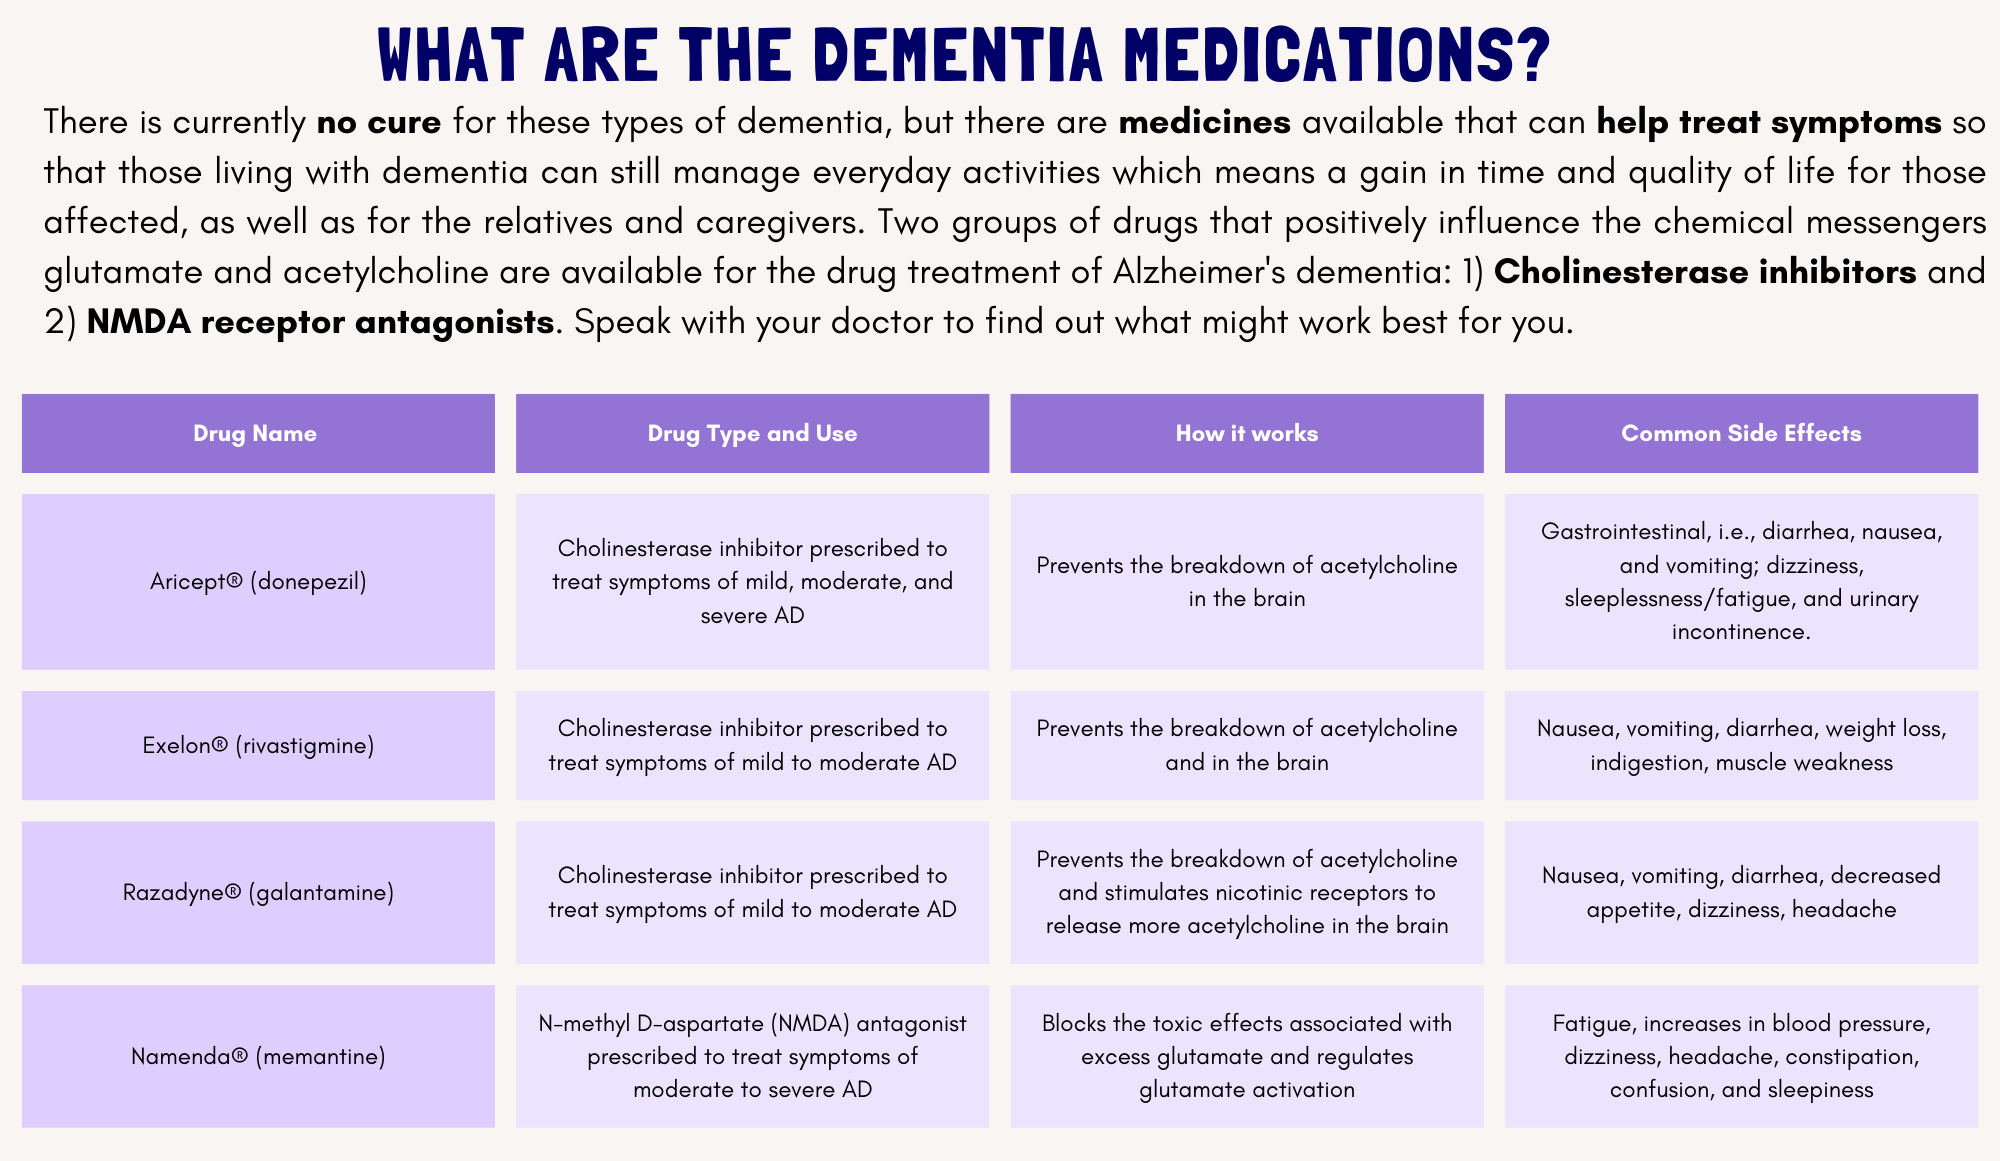 DementiaMedications